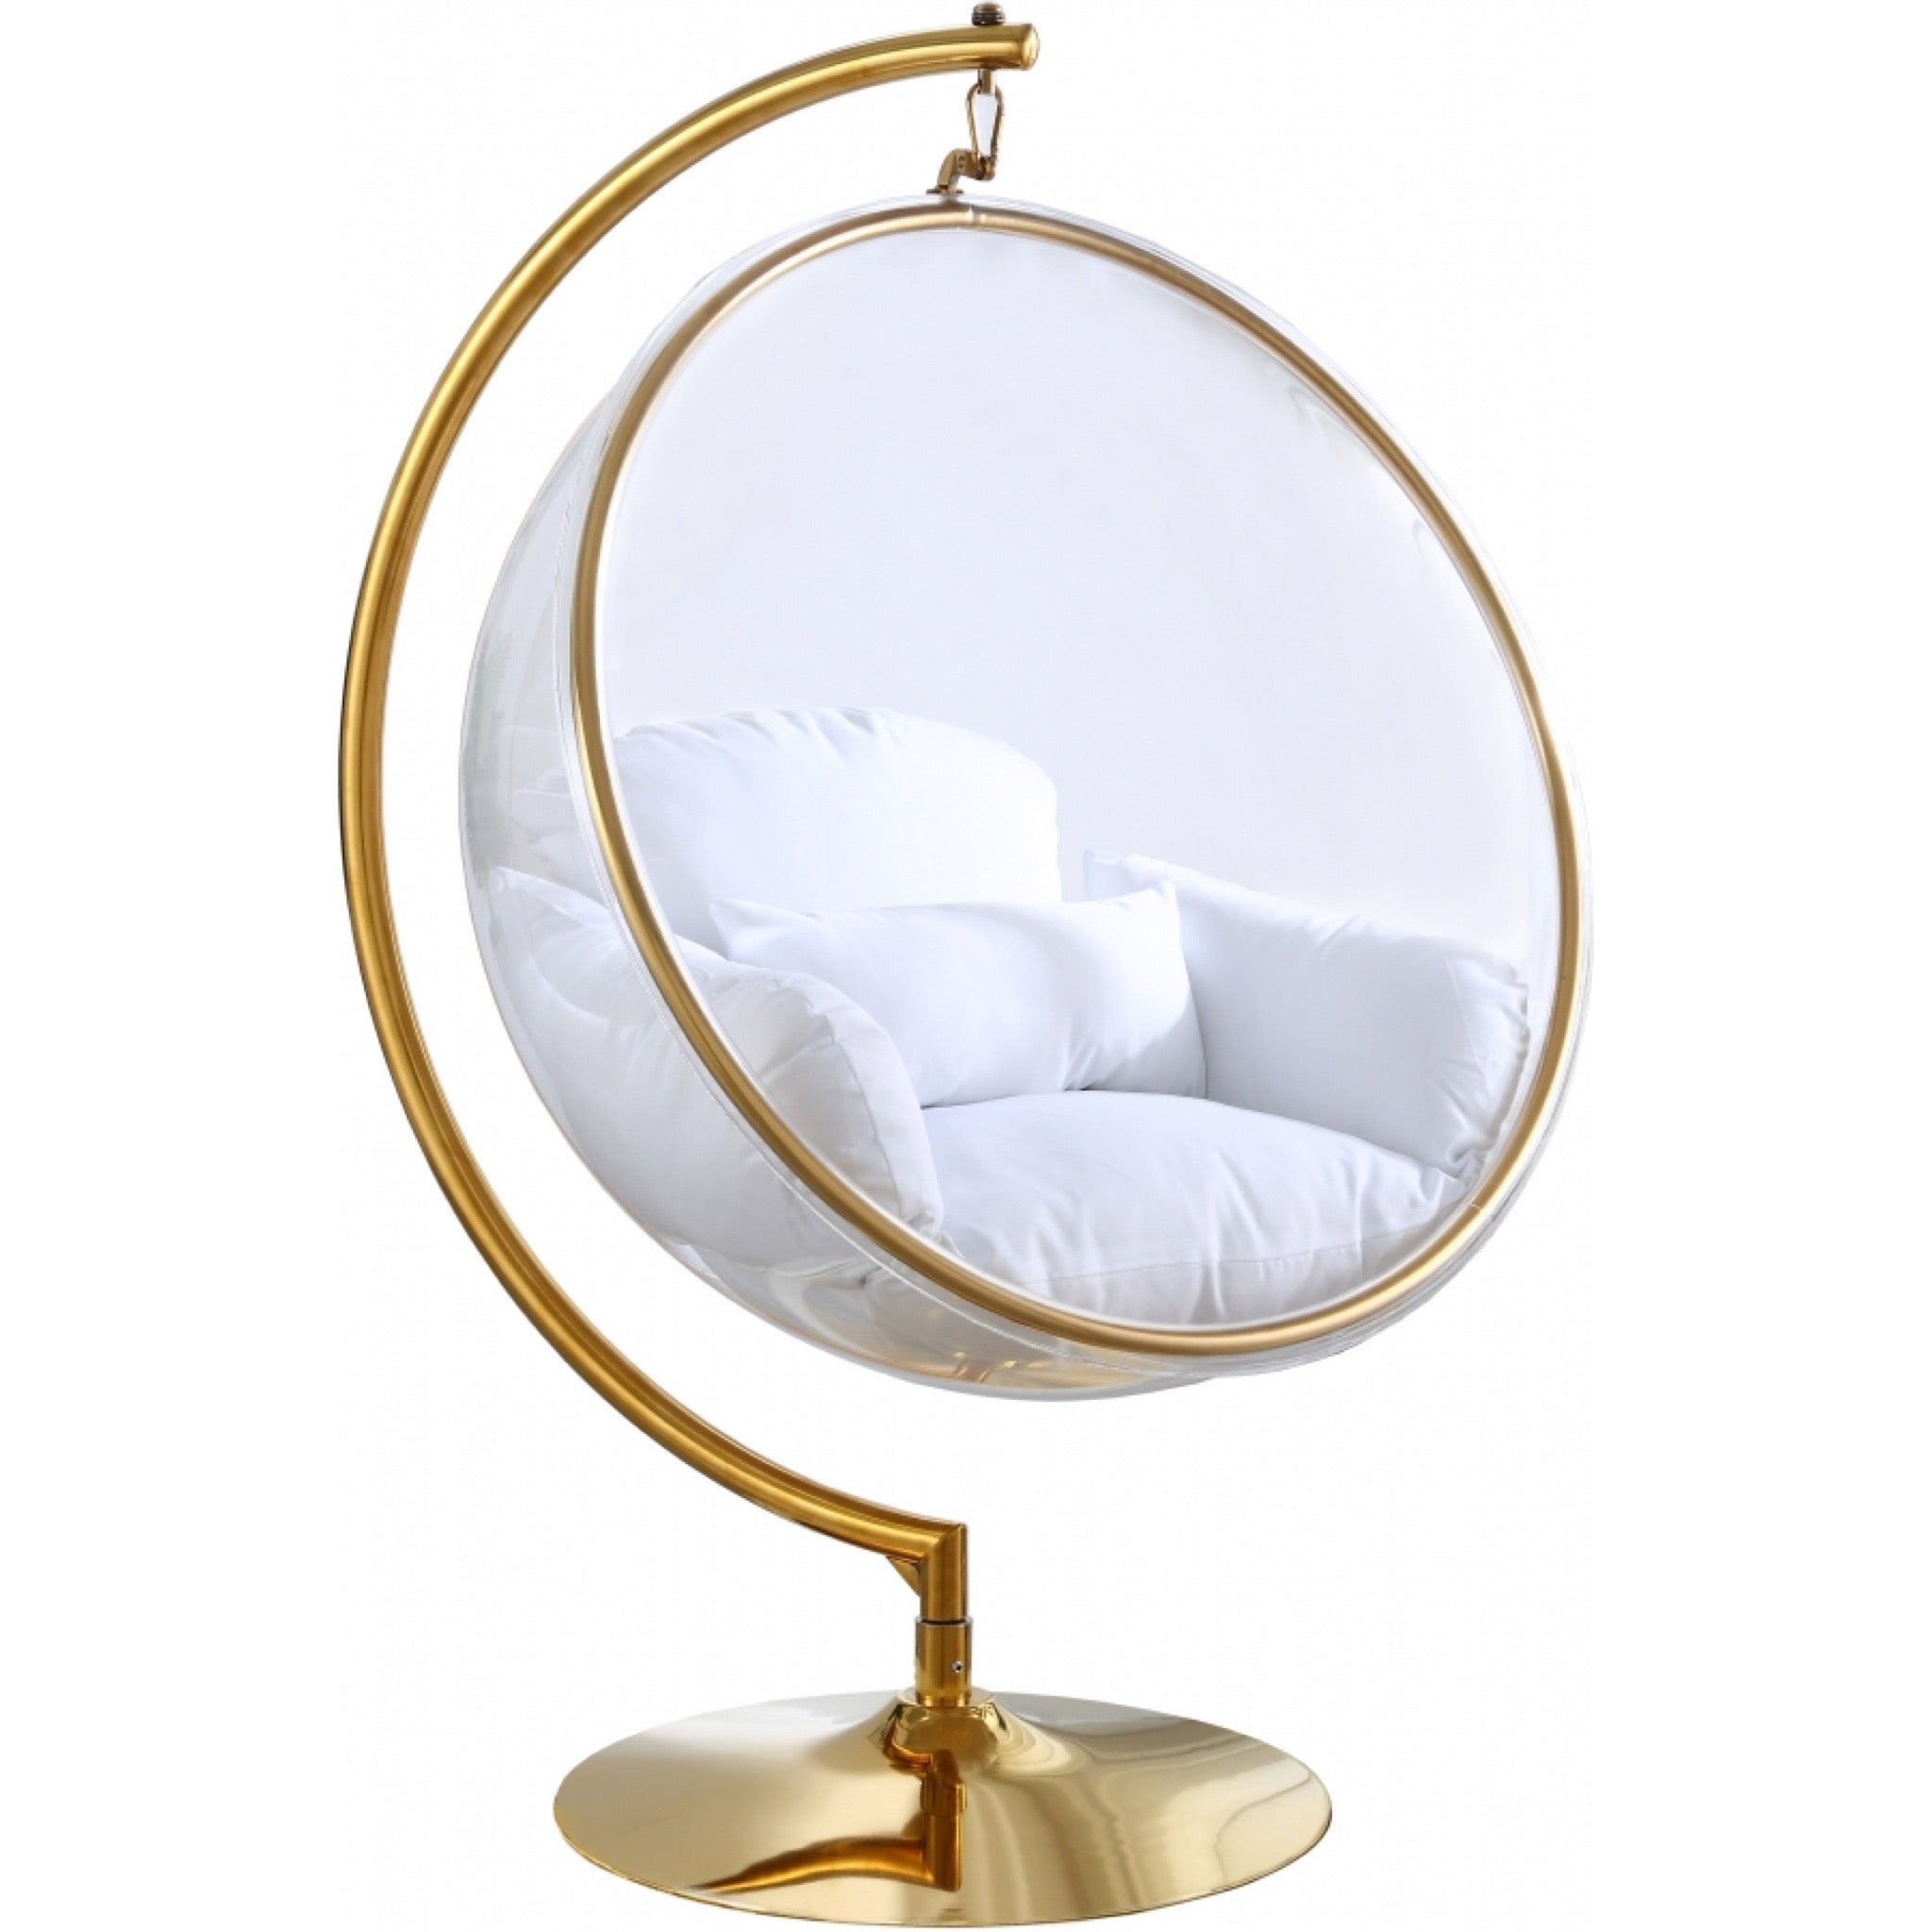 Luna Acrylic Swing Bubble Accent Chair - White